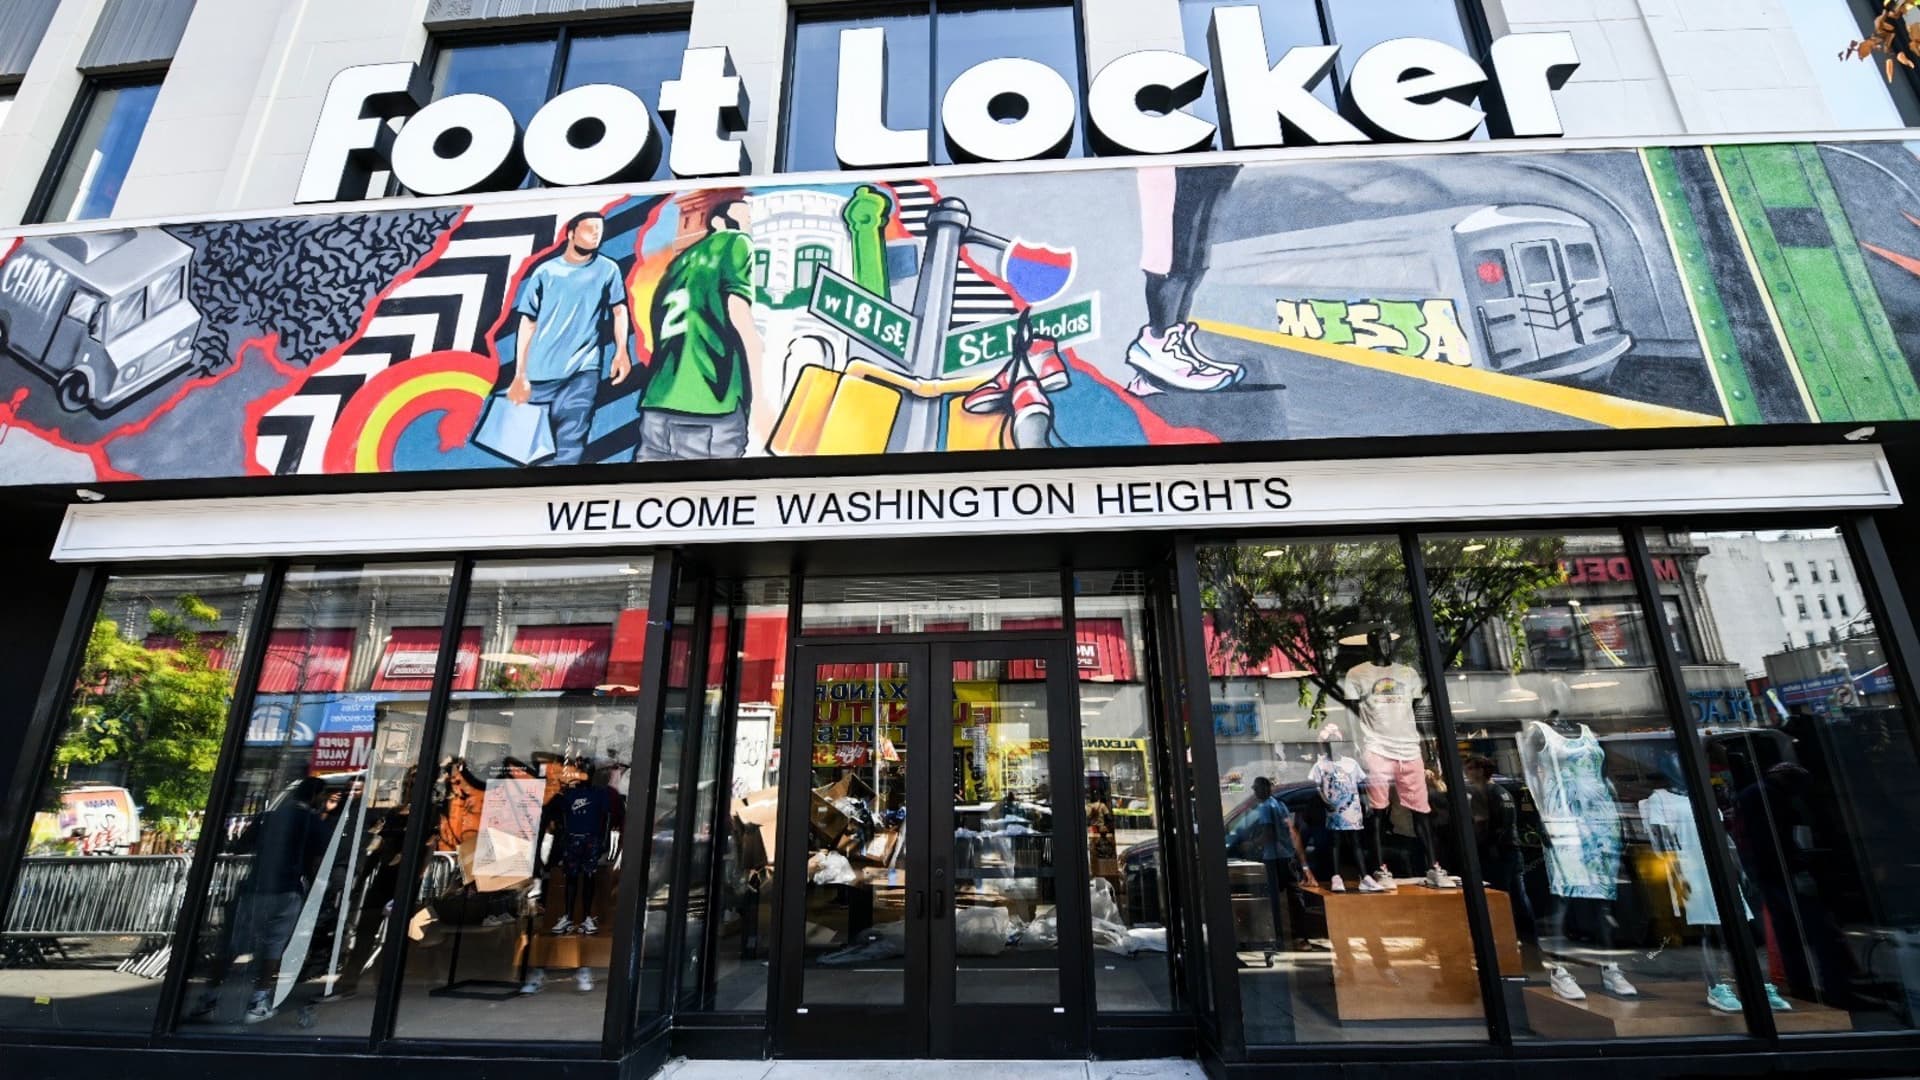 Foot Locker touts renewed Nike relationship, posts earnings – NewsEverything Business